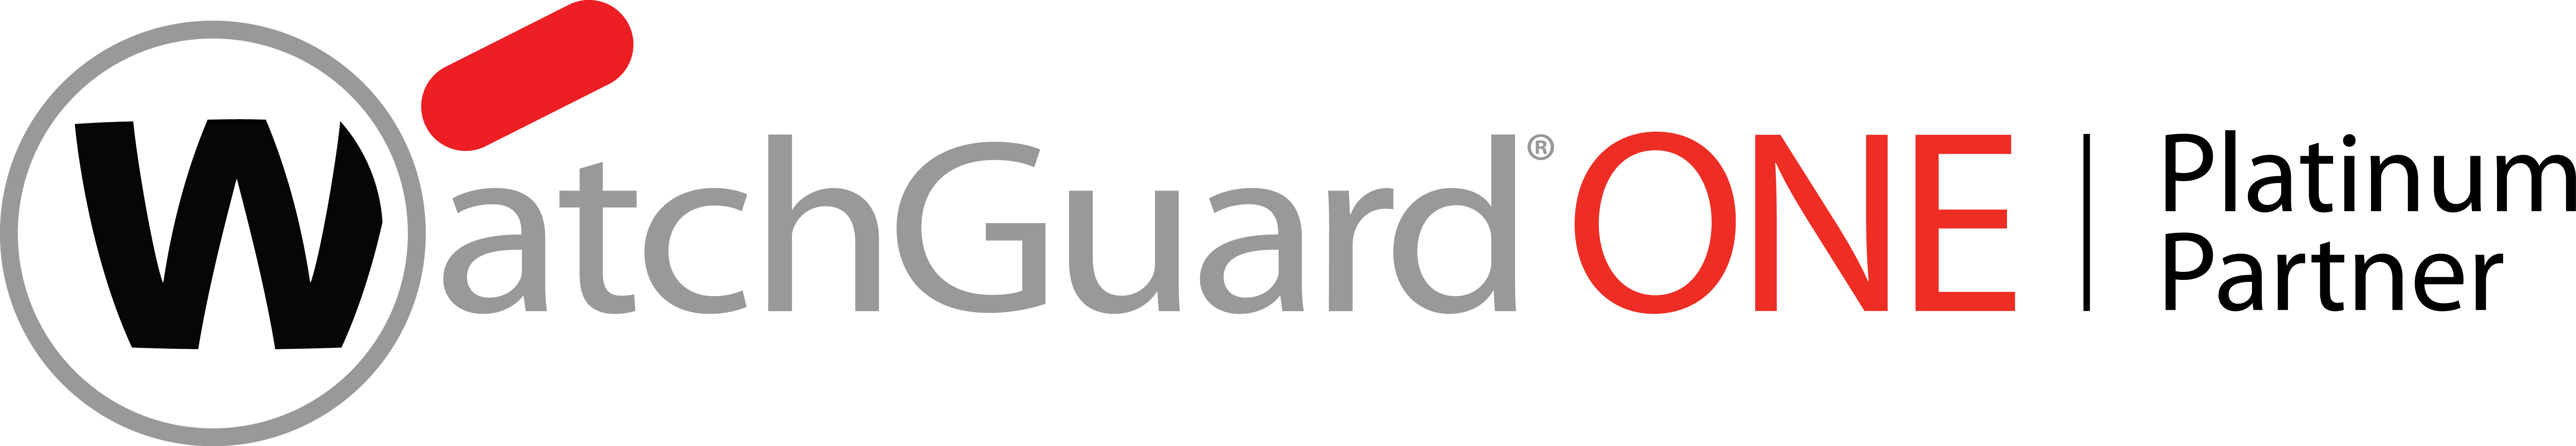 WatchGuardONE-Platinum-logo